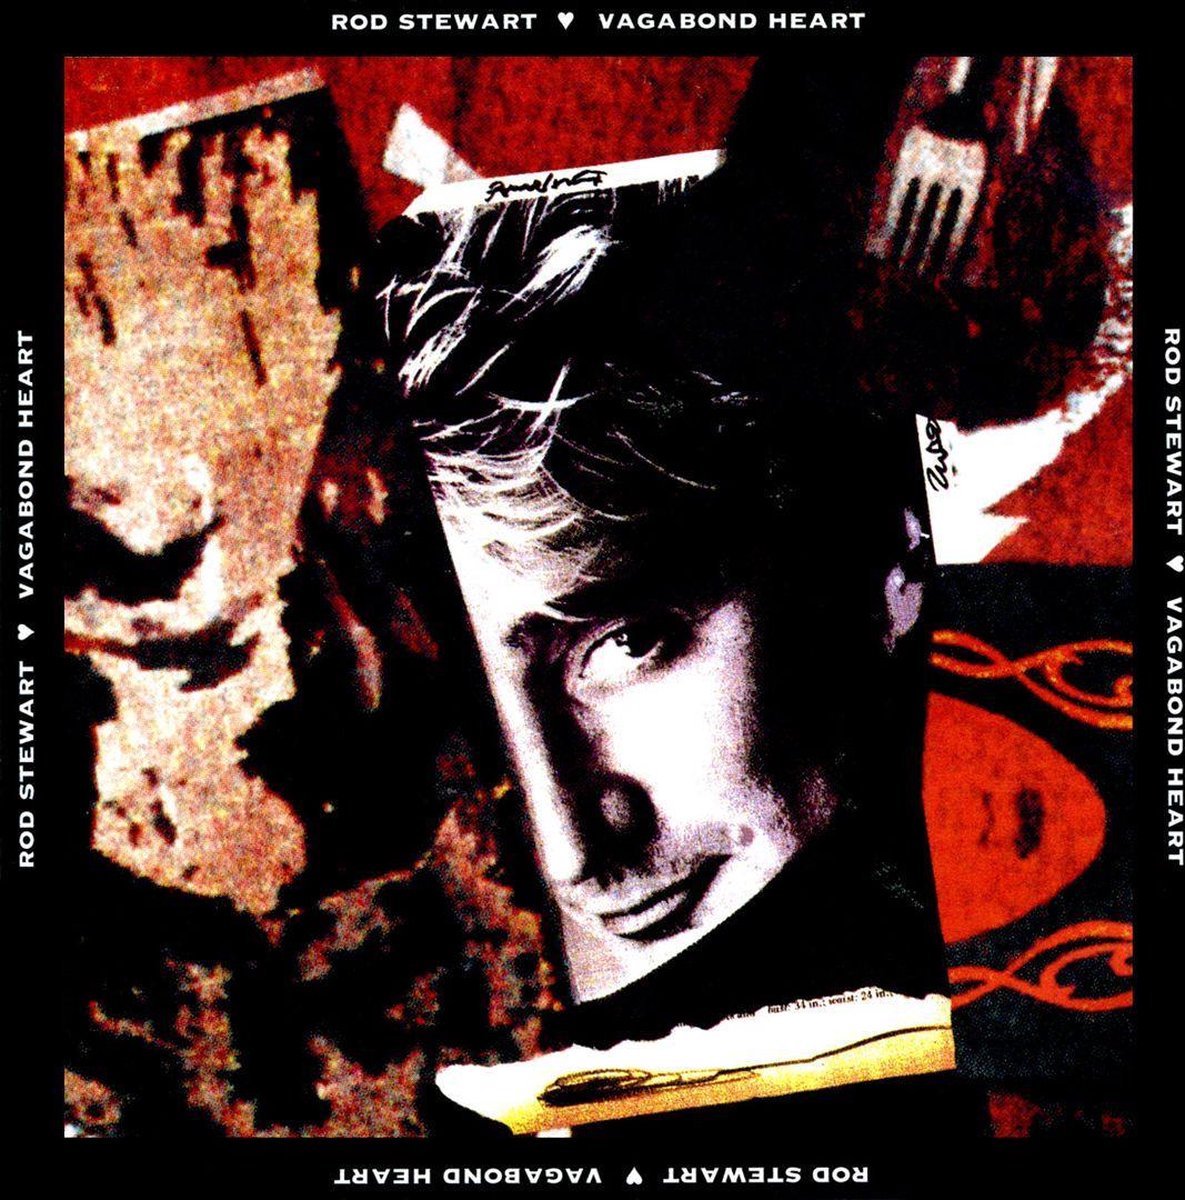 bol.com | Vagabond Heart, Rod Stewart | CD (album) | Muziek